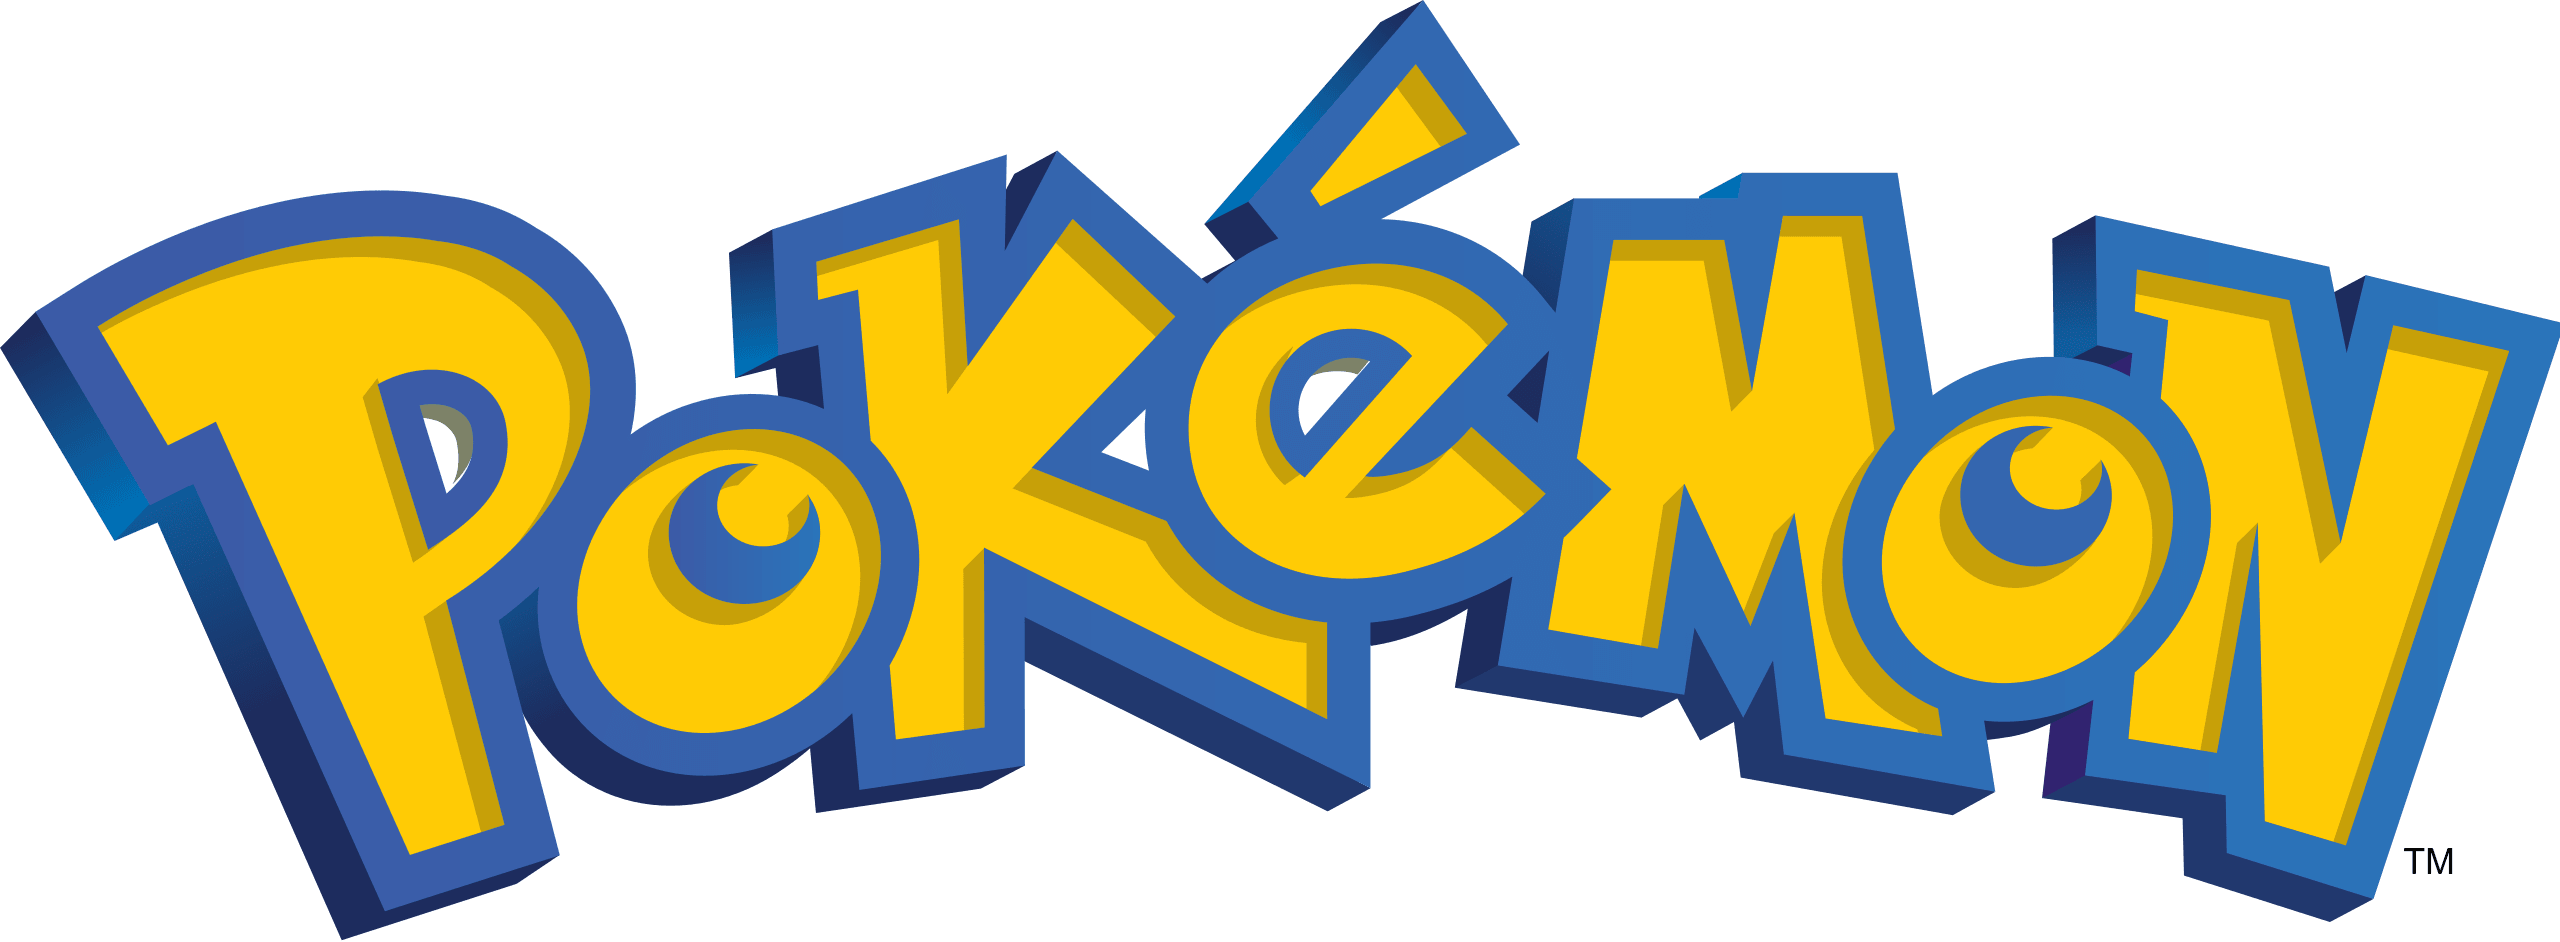 Pokemon Deck - 2023 World Championships - Gabriel Fernandez, Colorless Lugia - Hobby Champion Inc